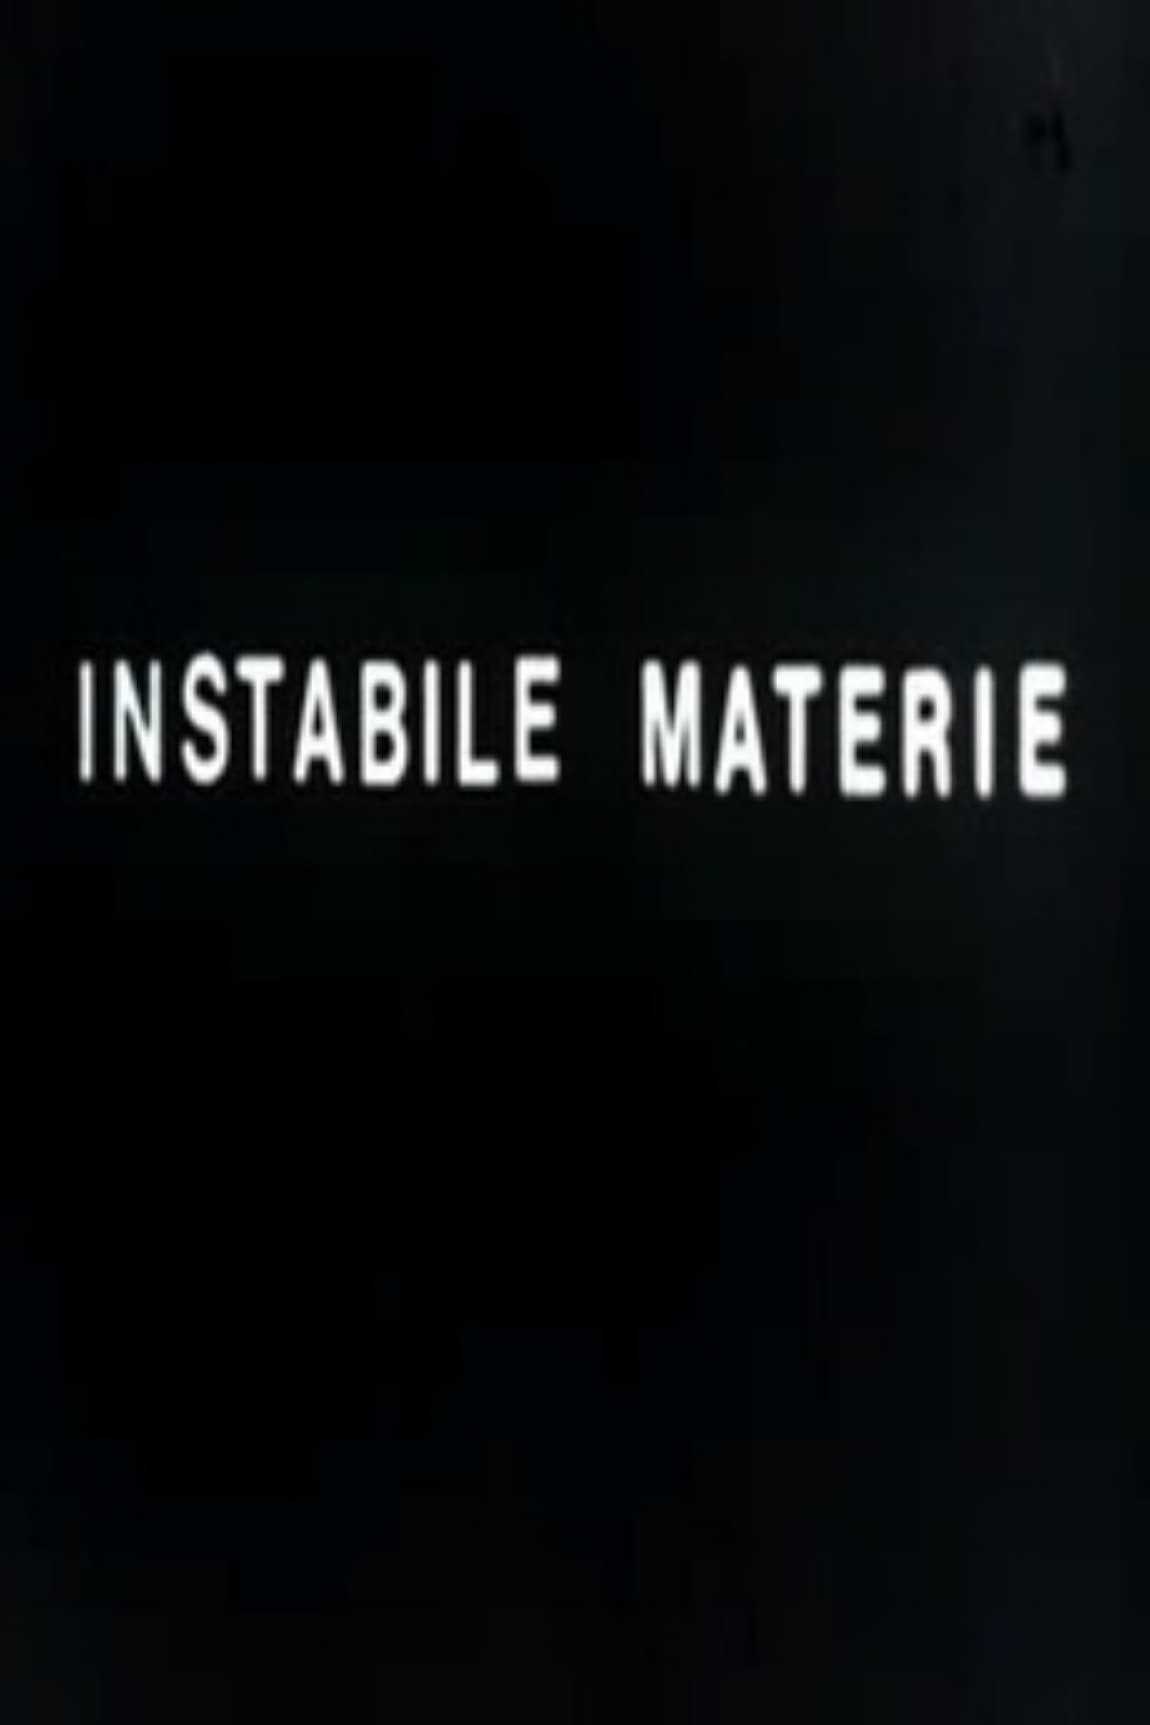 Unstable Materials